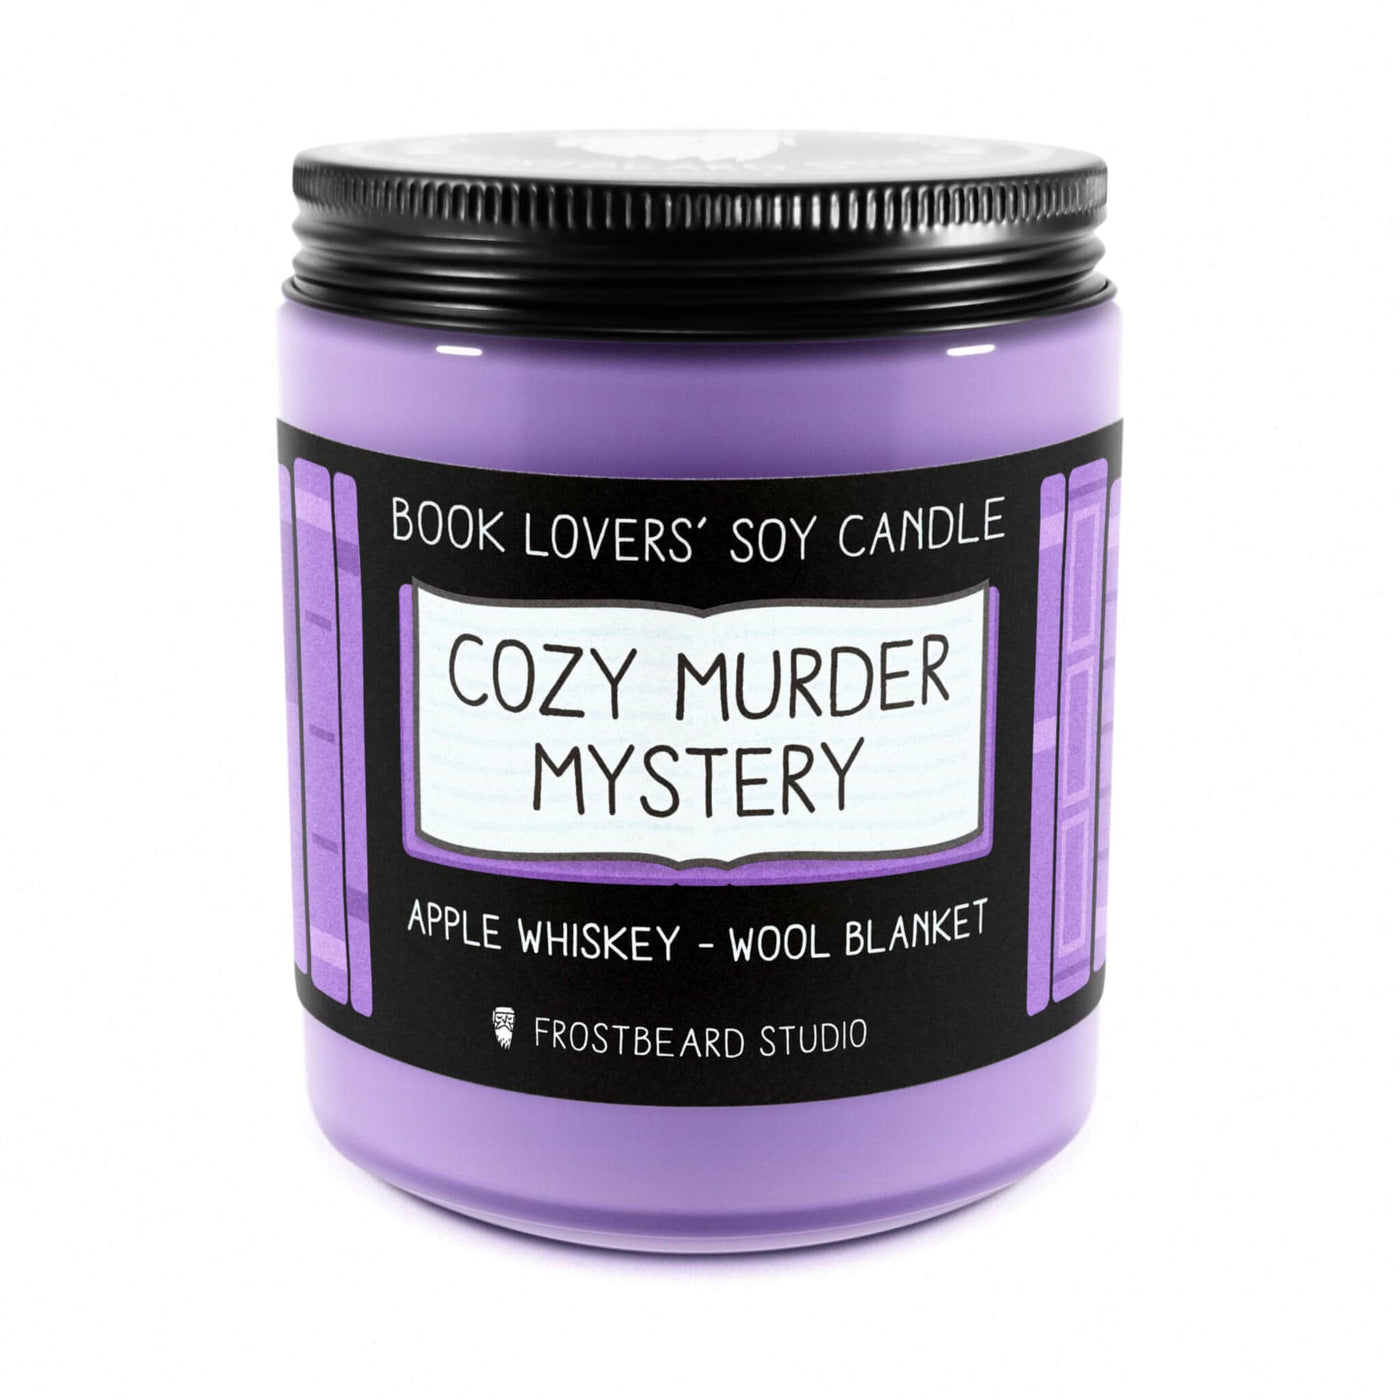 Cozy Murder Mystery  -  8 oz Jar  -  Book Lovers' Soy Candle  -  Frostbeard Studio